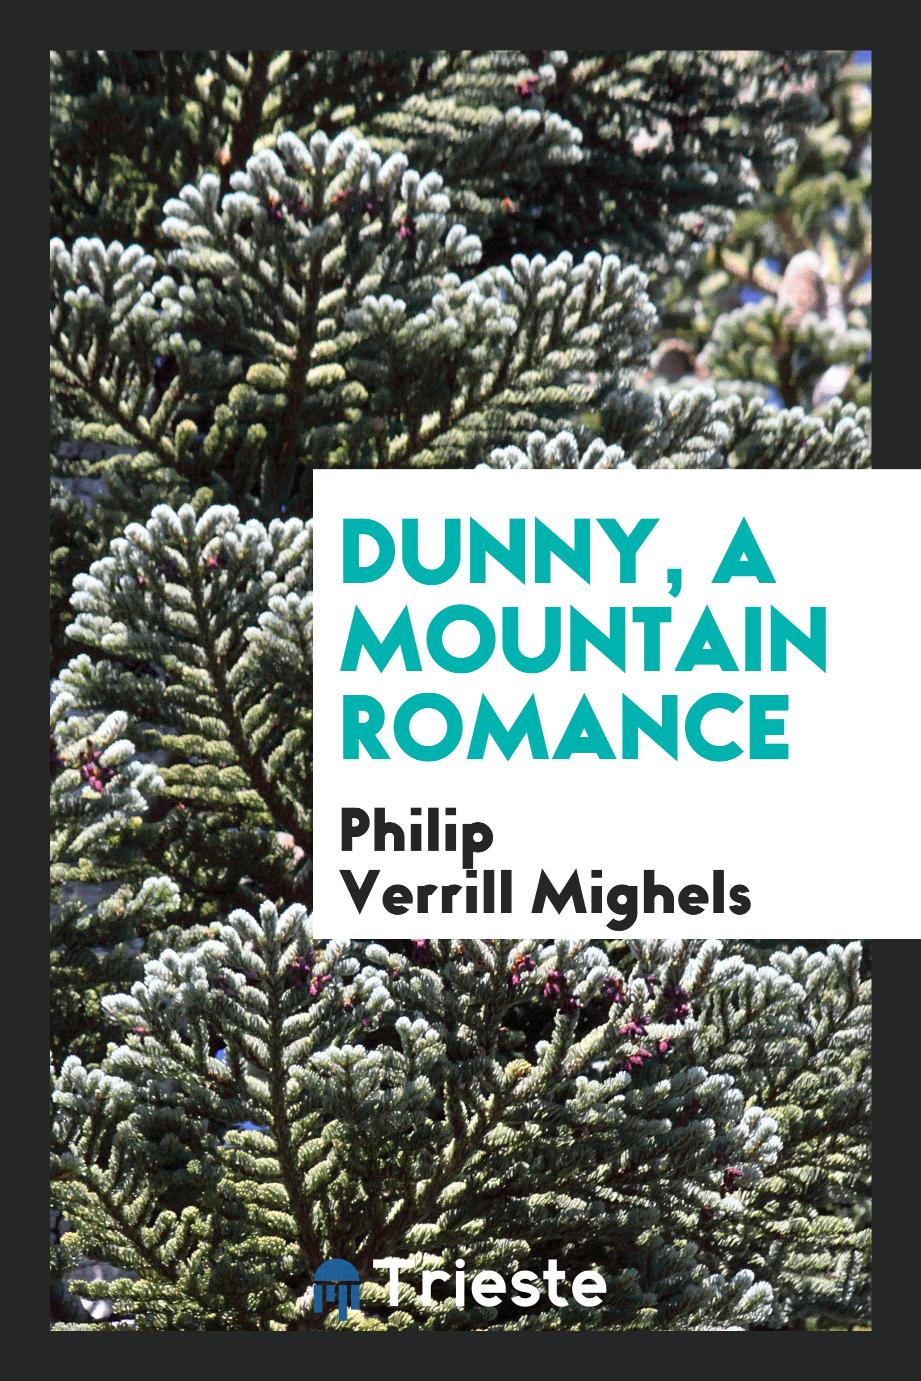 Dunny, a mountain romance